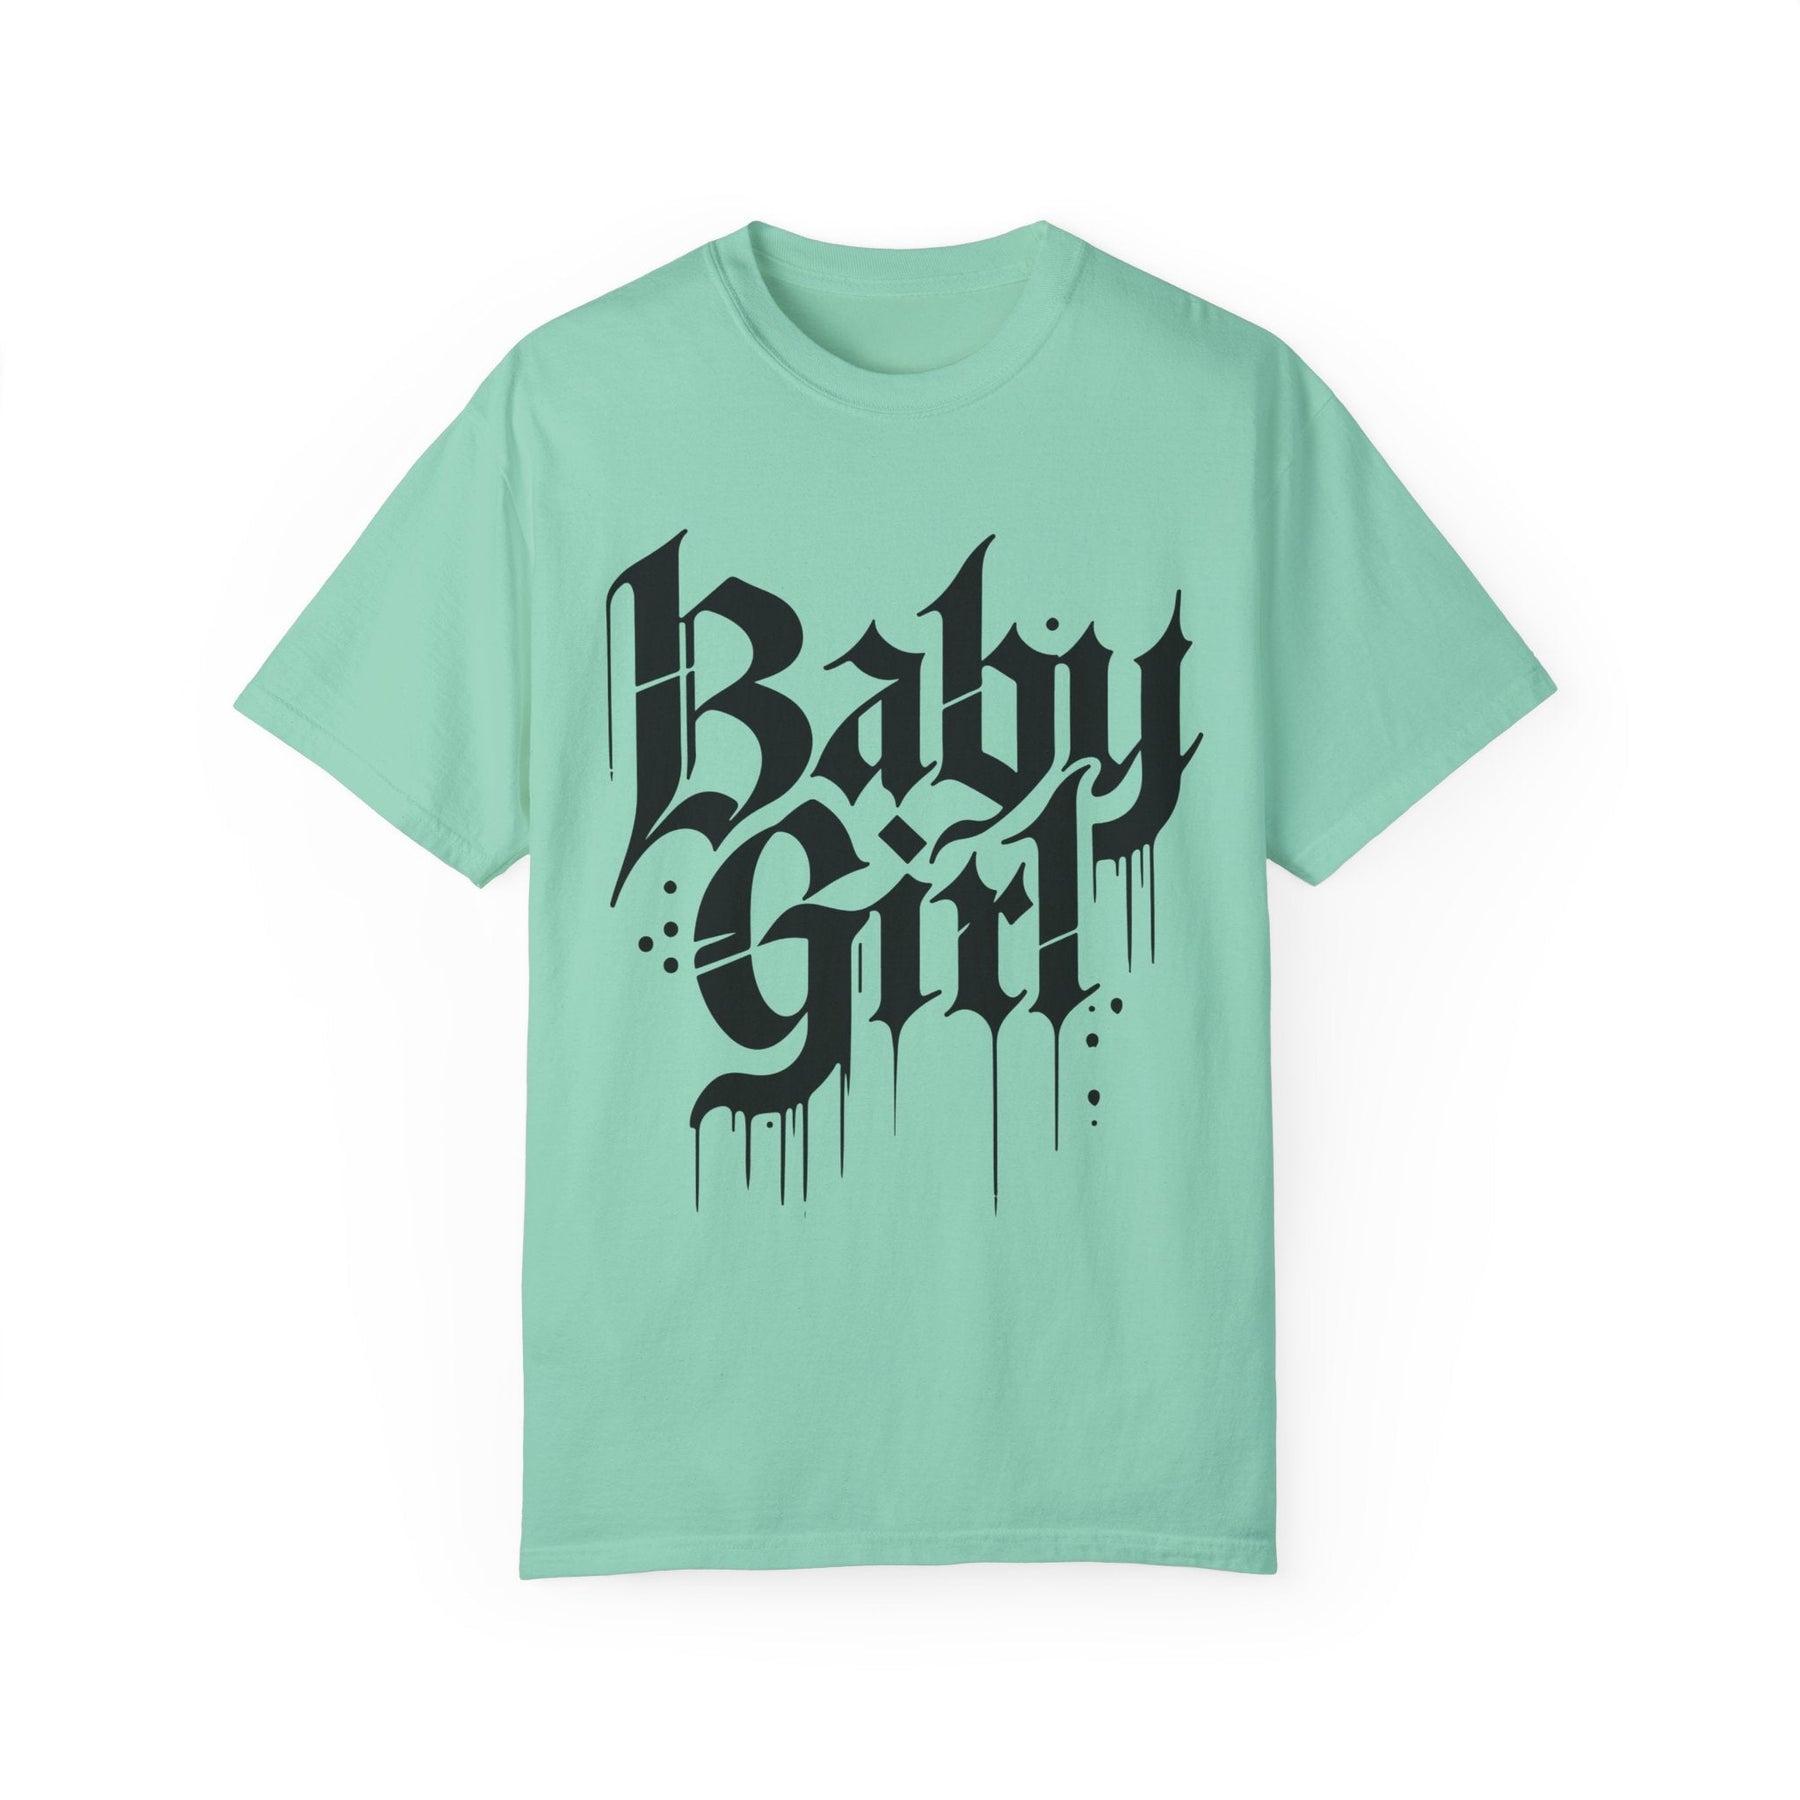 Baby Girl Comfort Tee - Goth Cloth Co.T - Shirt83357000450444000741